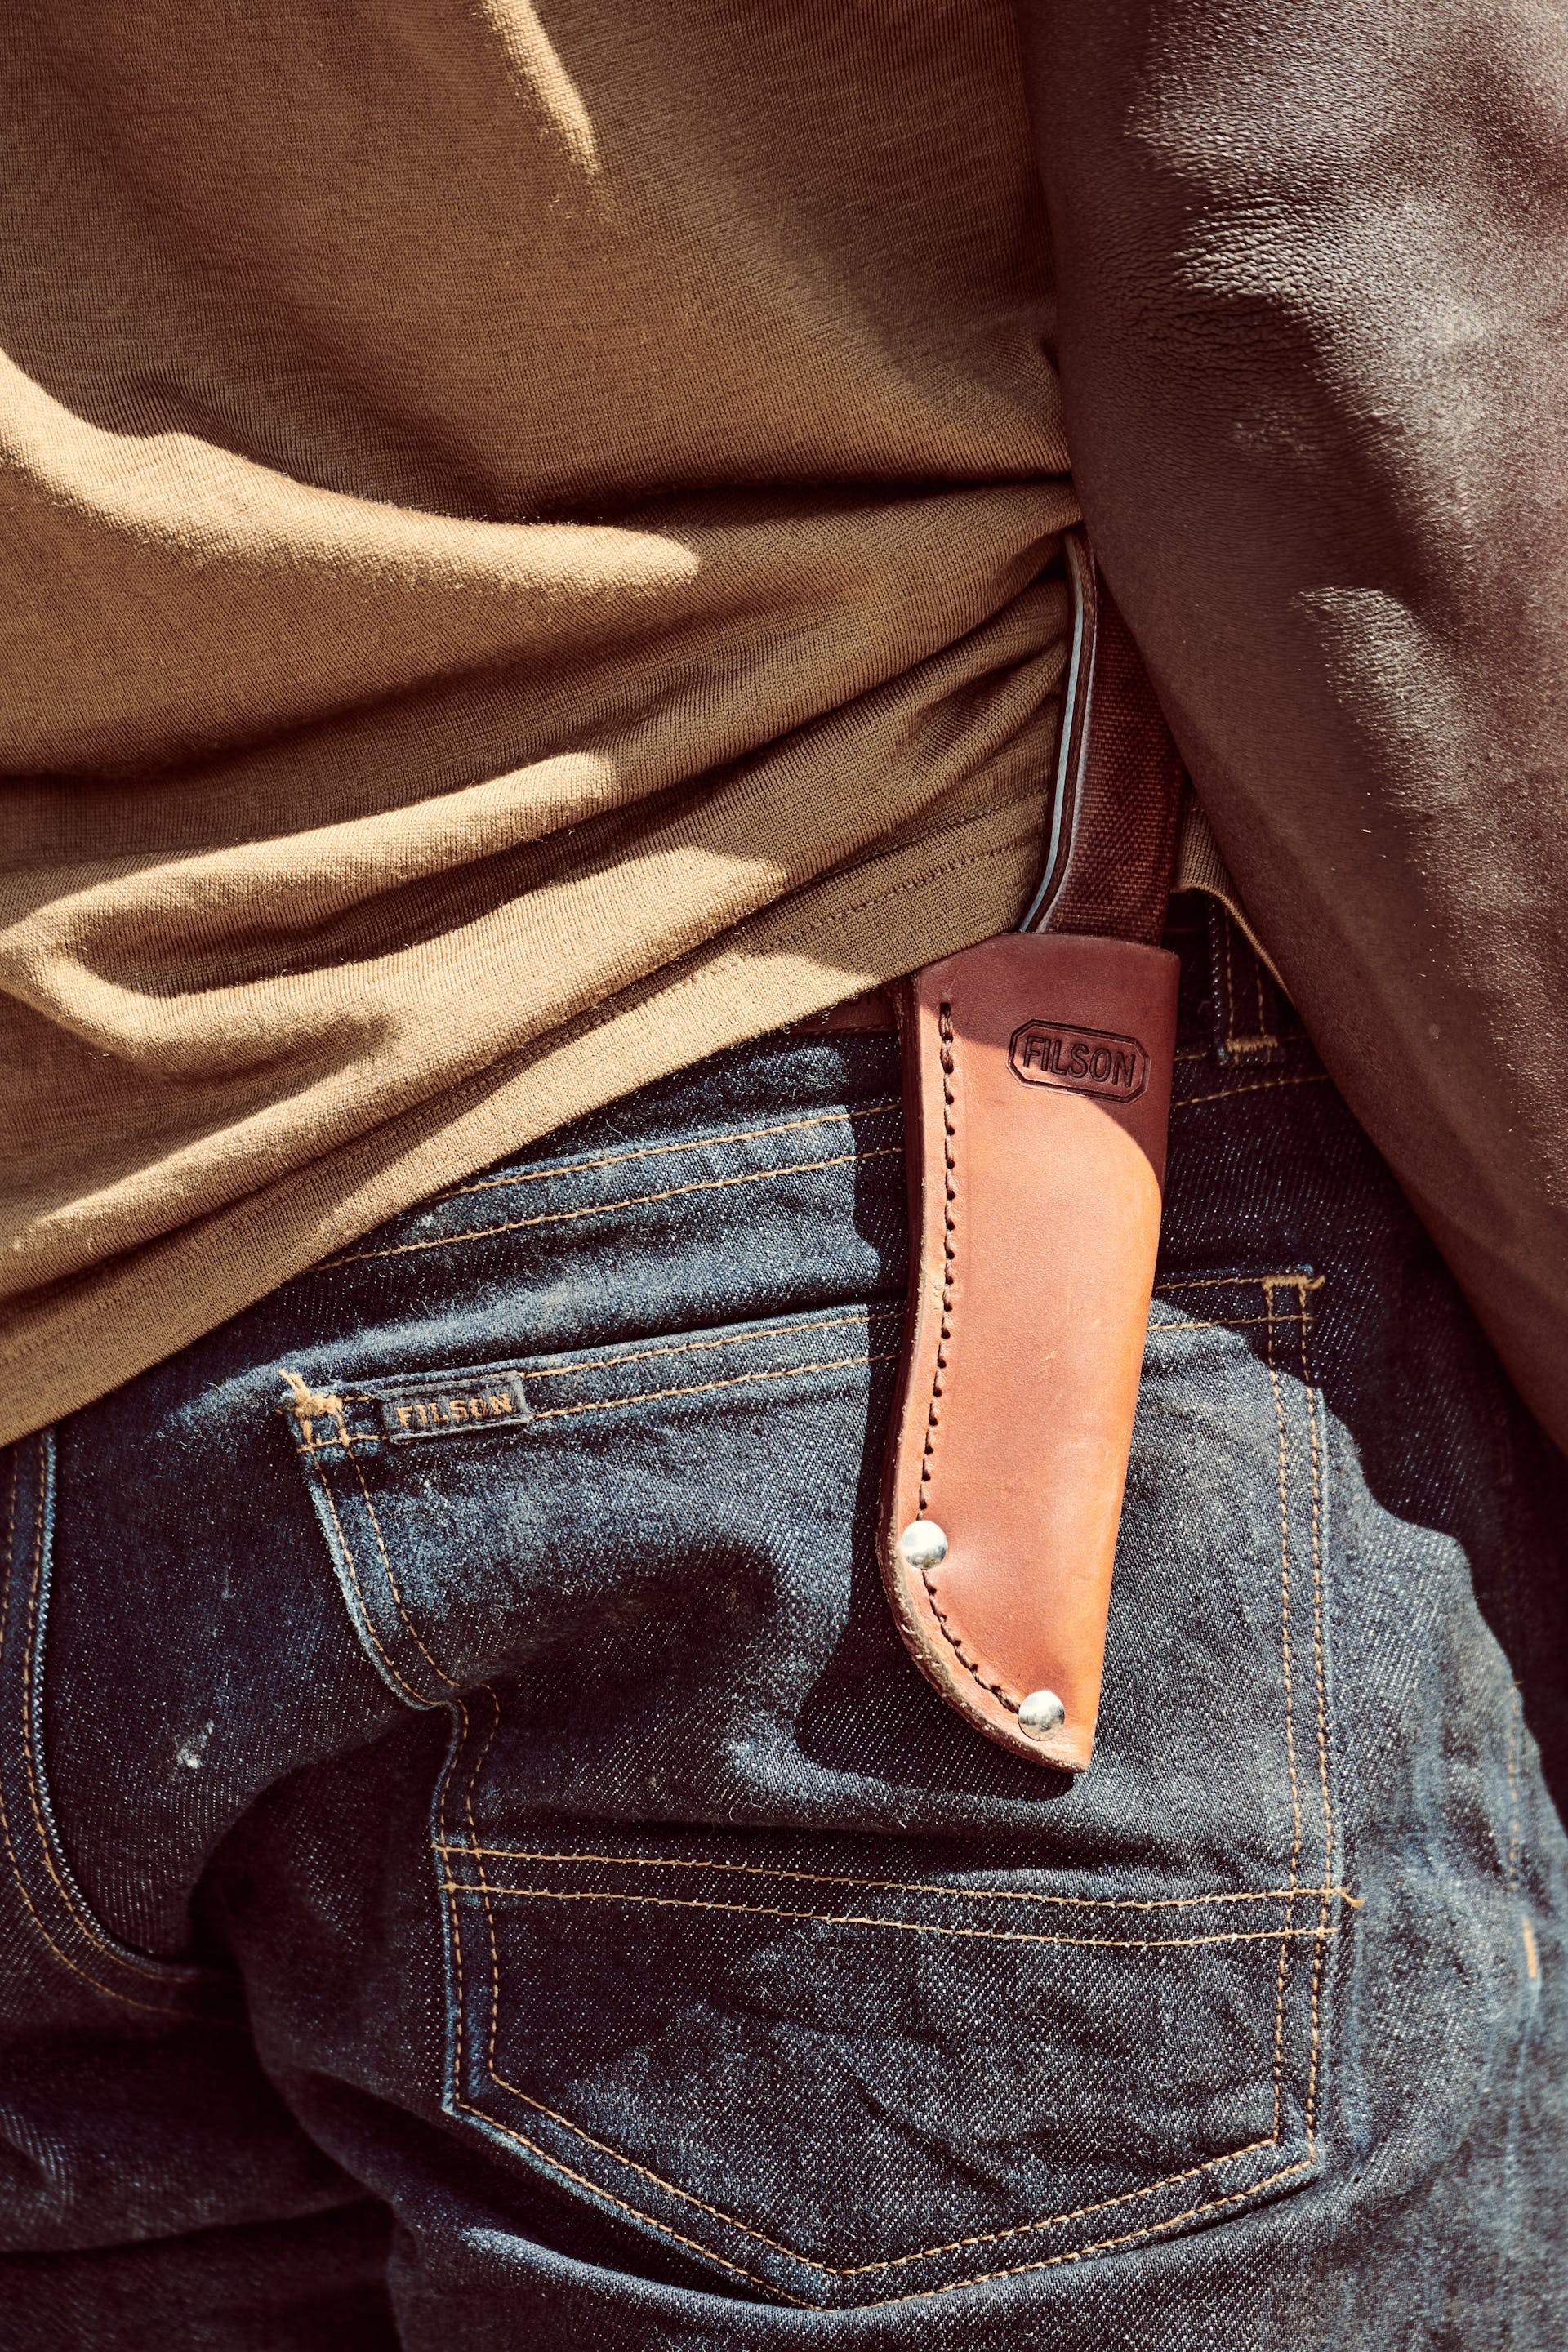 Man wearing denim with a Filson Bird & Trout knife in a sheath on his belt